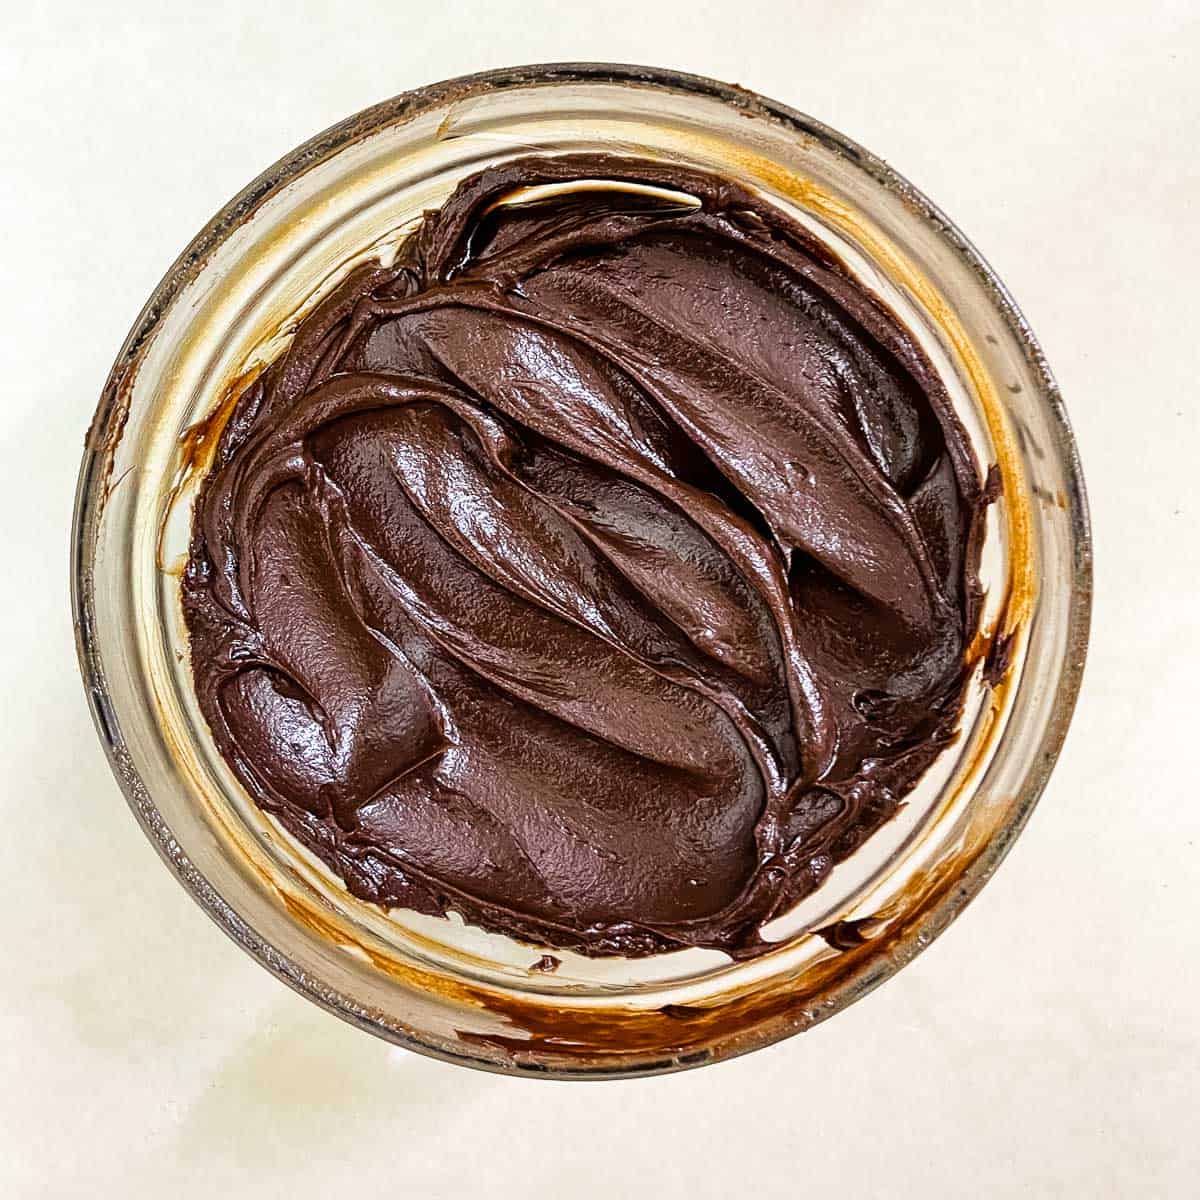 A bowl of dark chocolate ganache in spreadable consistency.